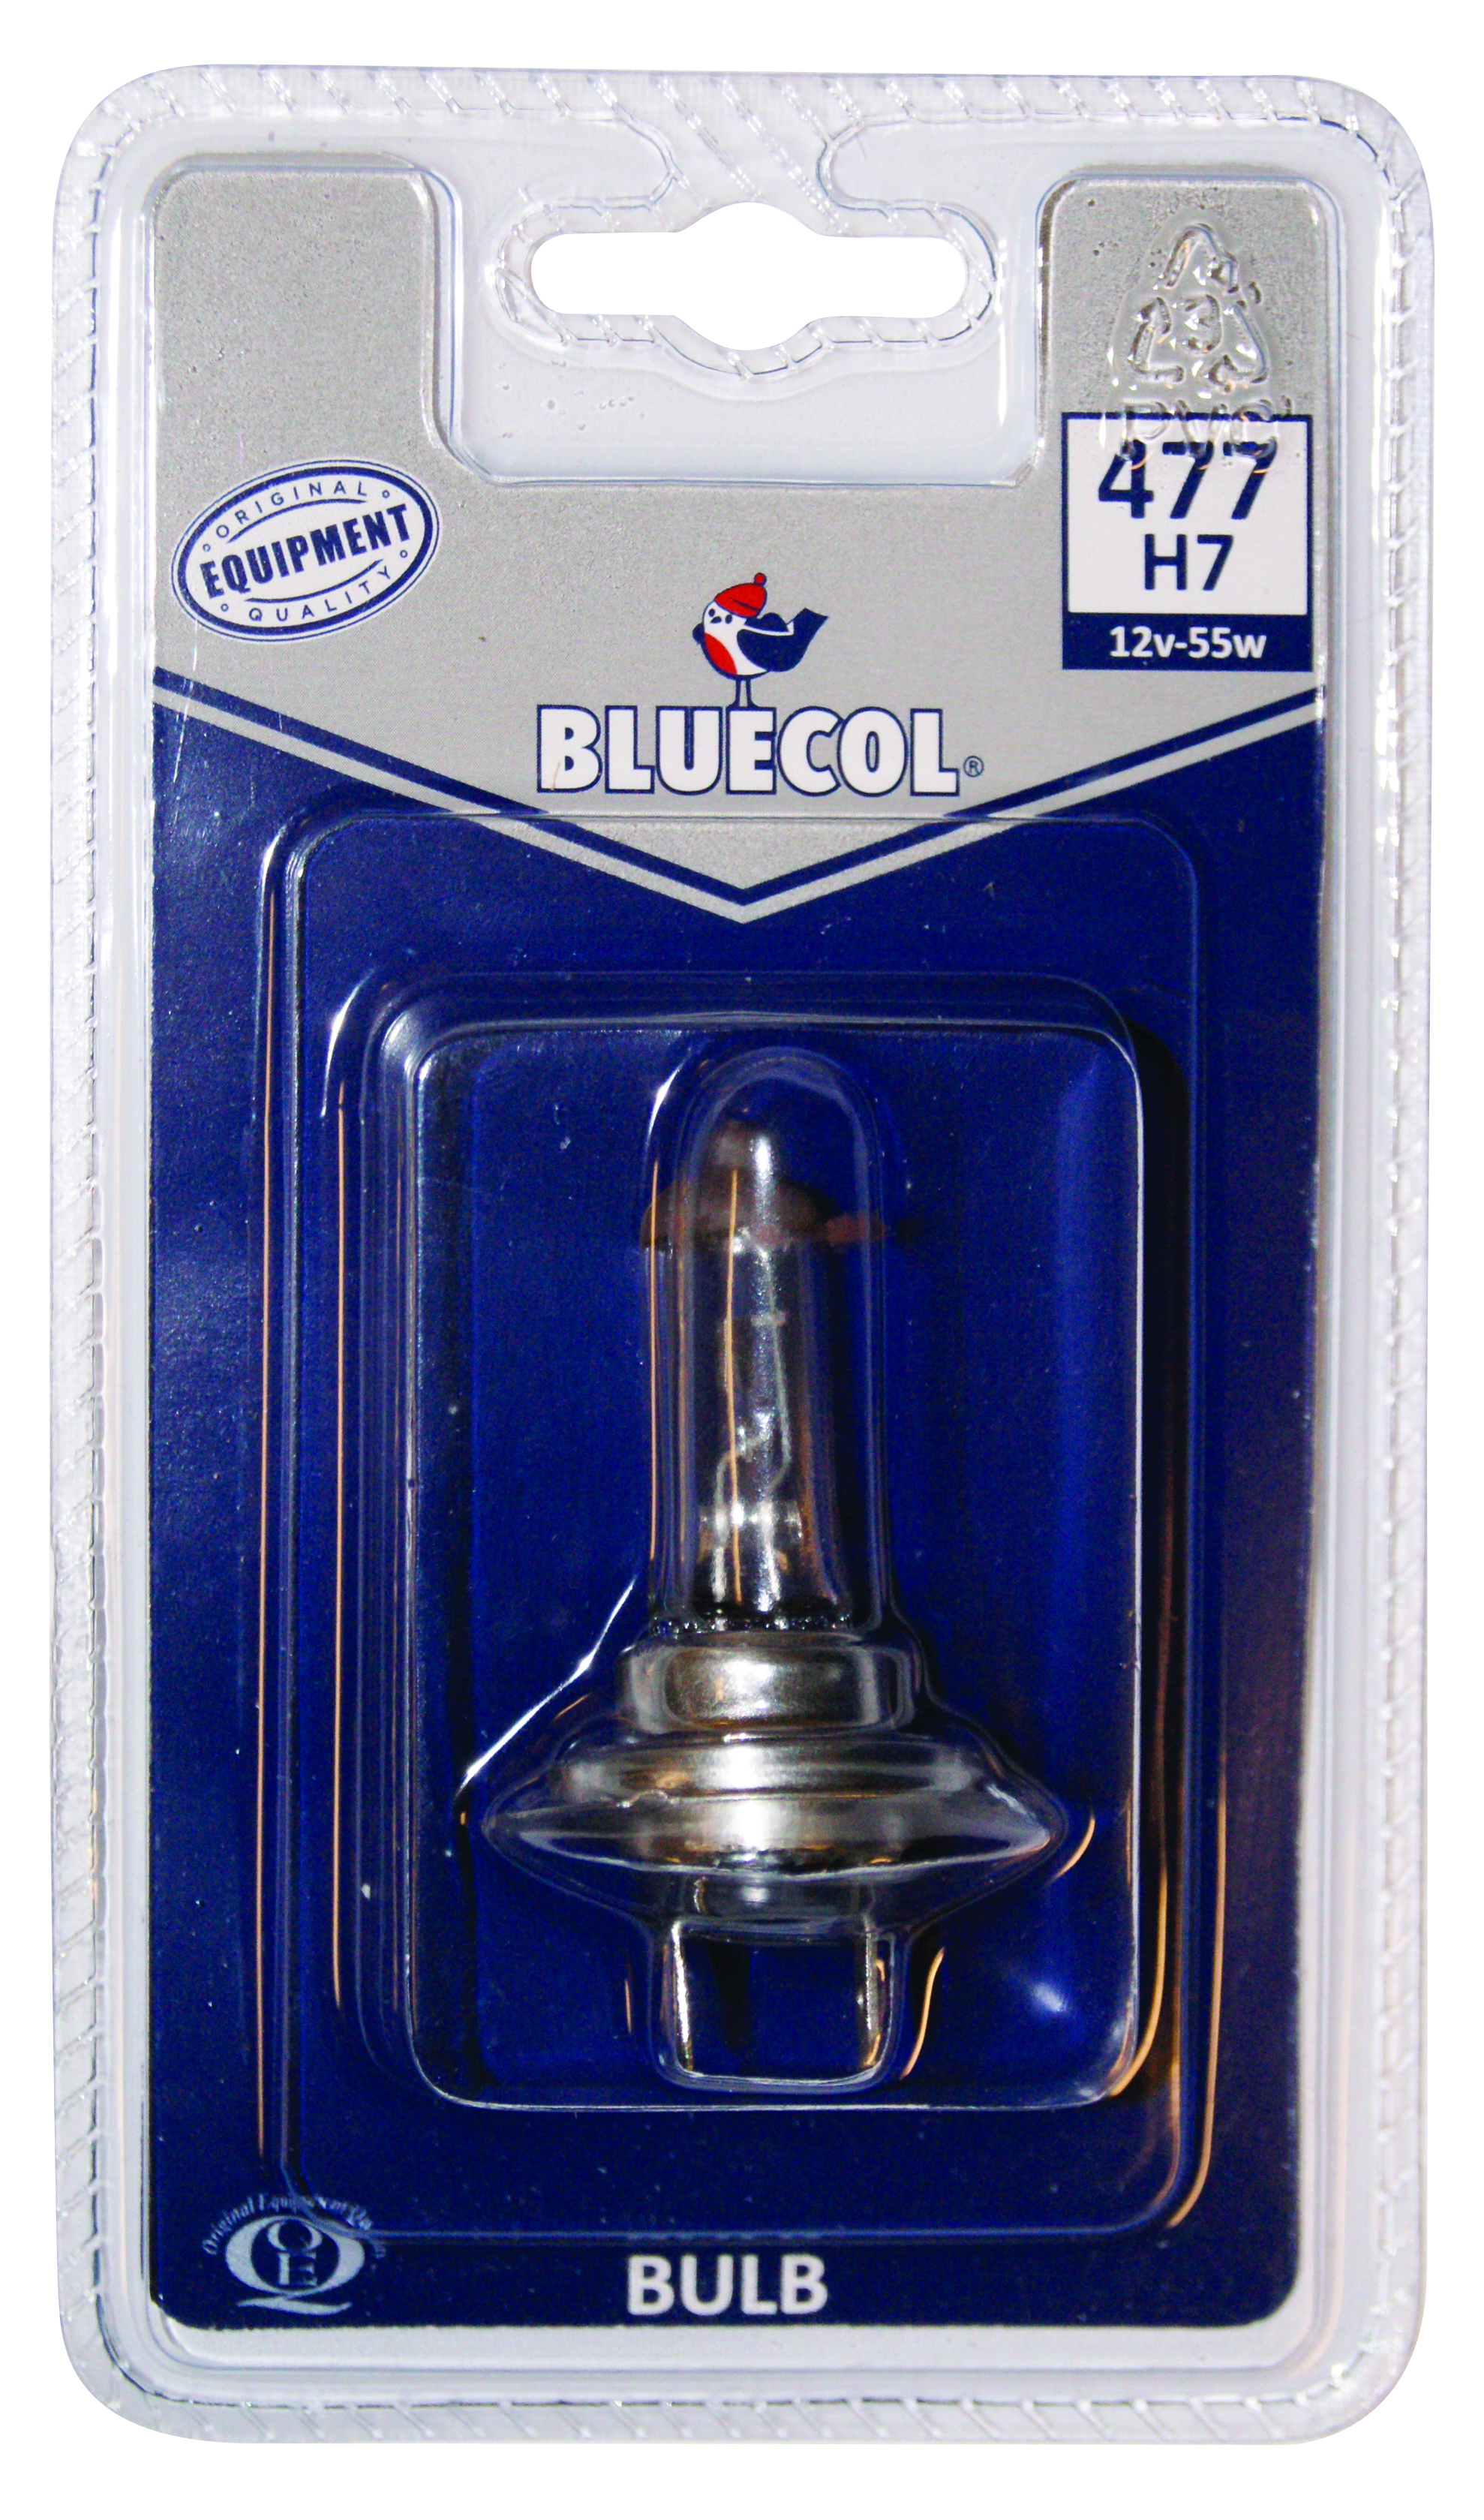 Bluecol 477 H7 Halogen Bulb image